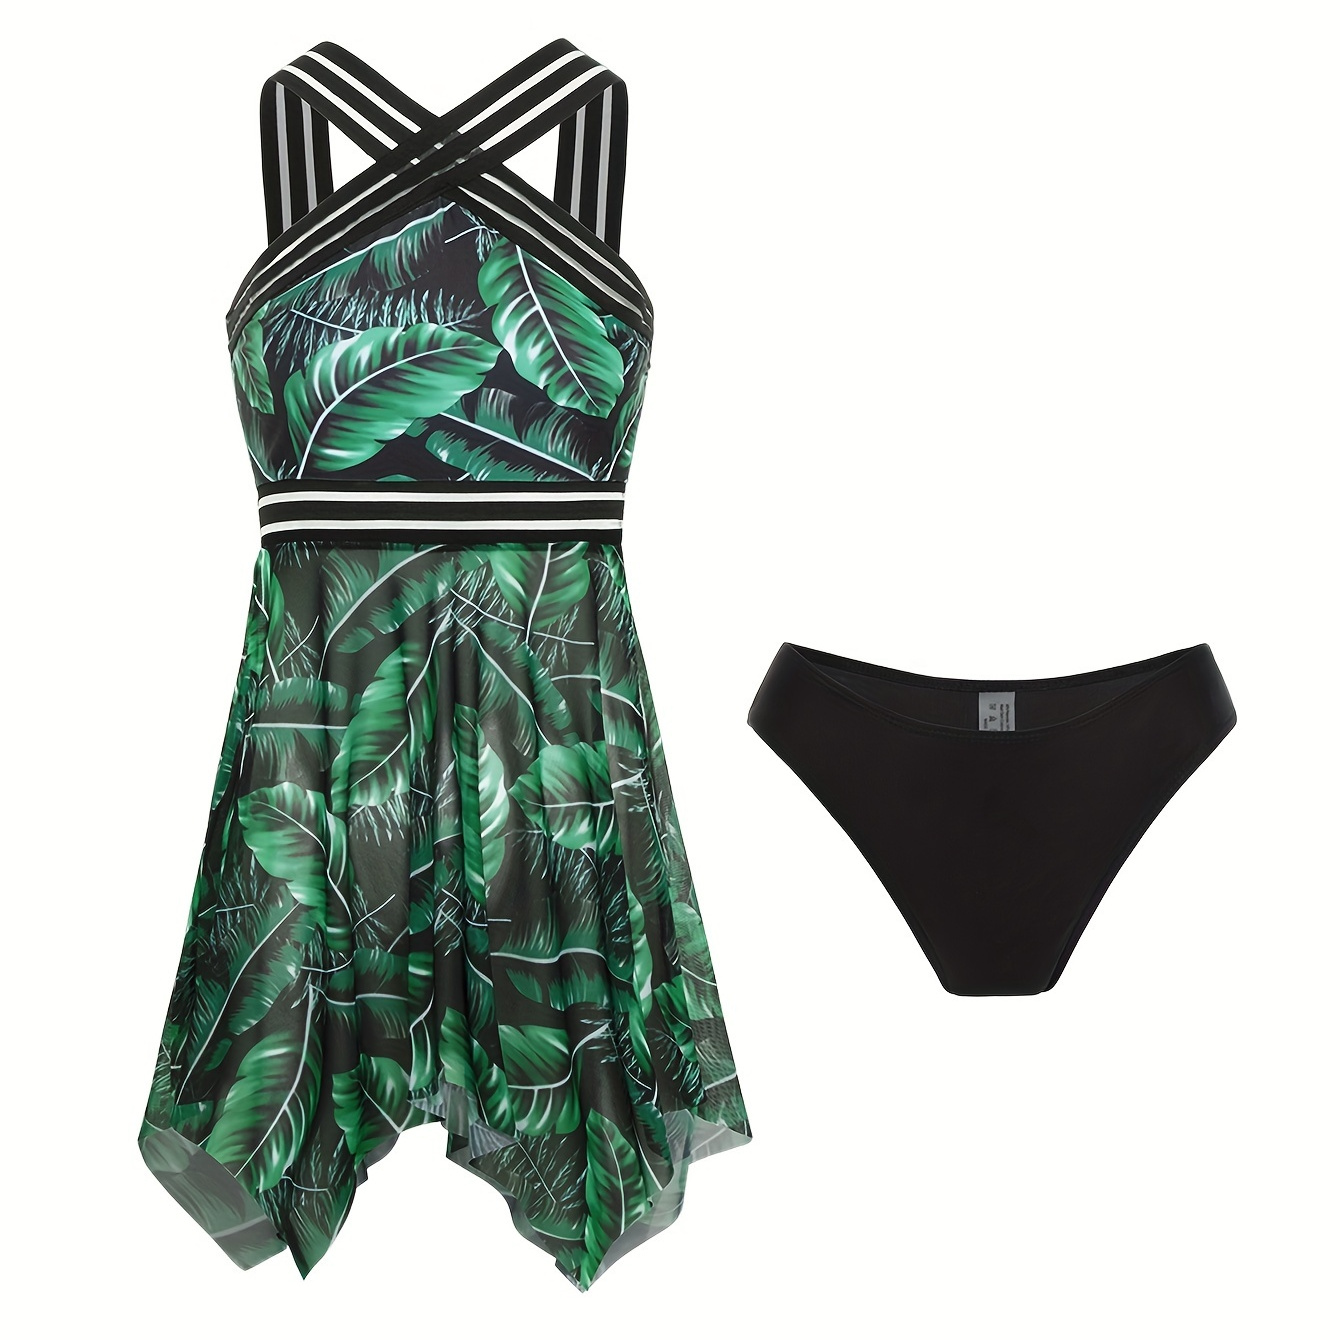 

Leaf Print Contrast Mesh 2 Pieces Swimsuit, Criss Cross Neck High Cut Casual Beachwear Bathing Suit, Women's Swimwear & Clothing